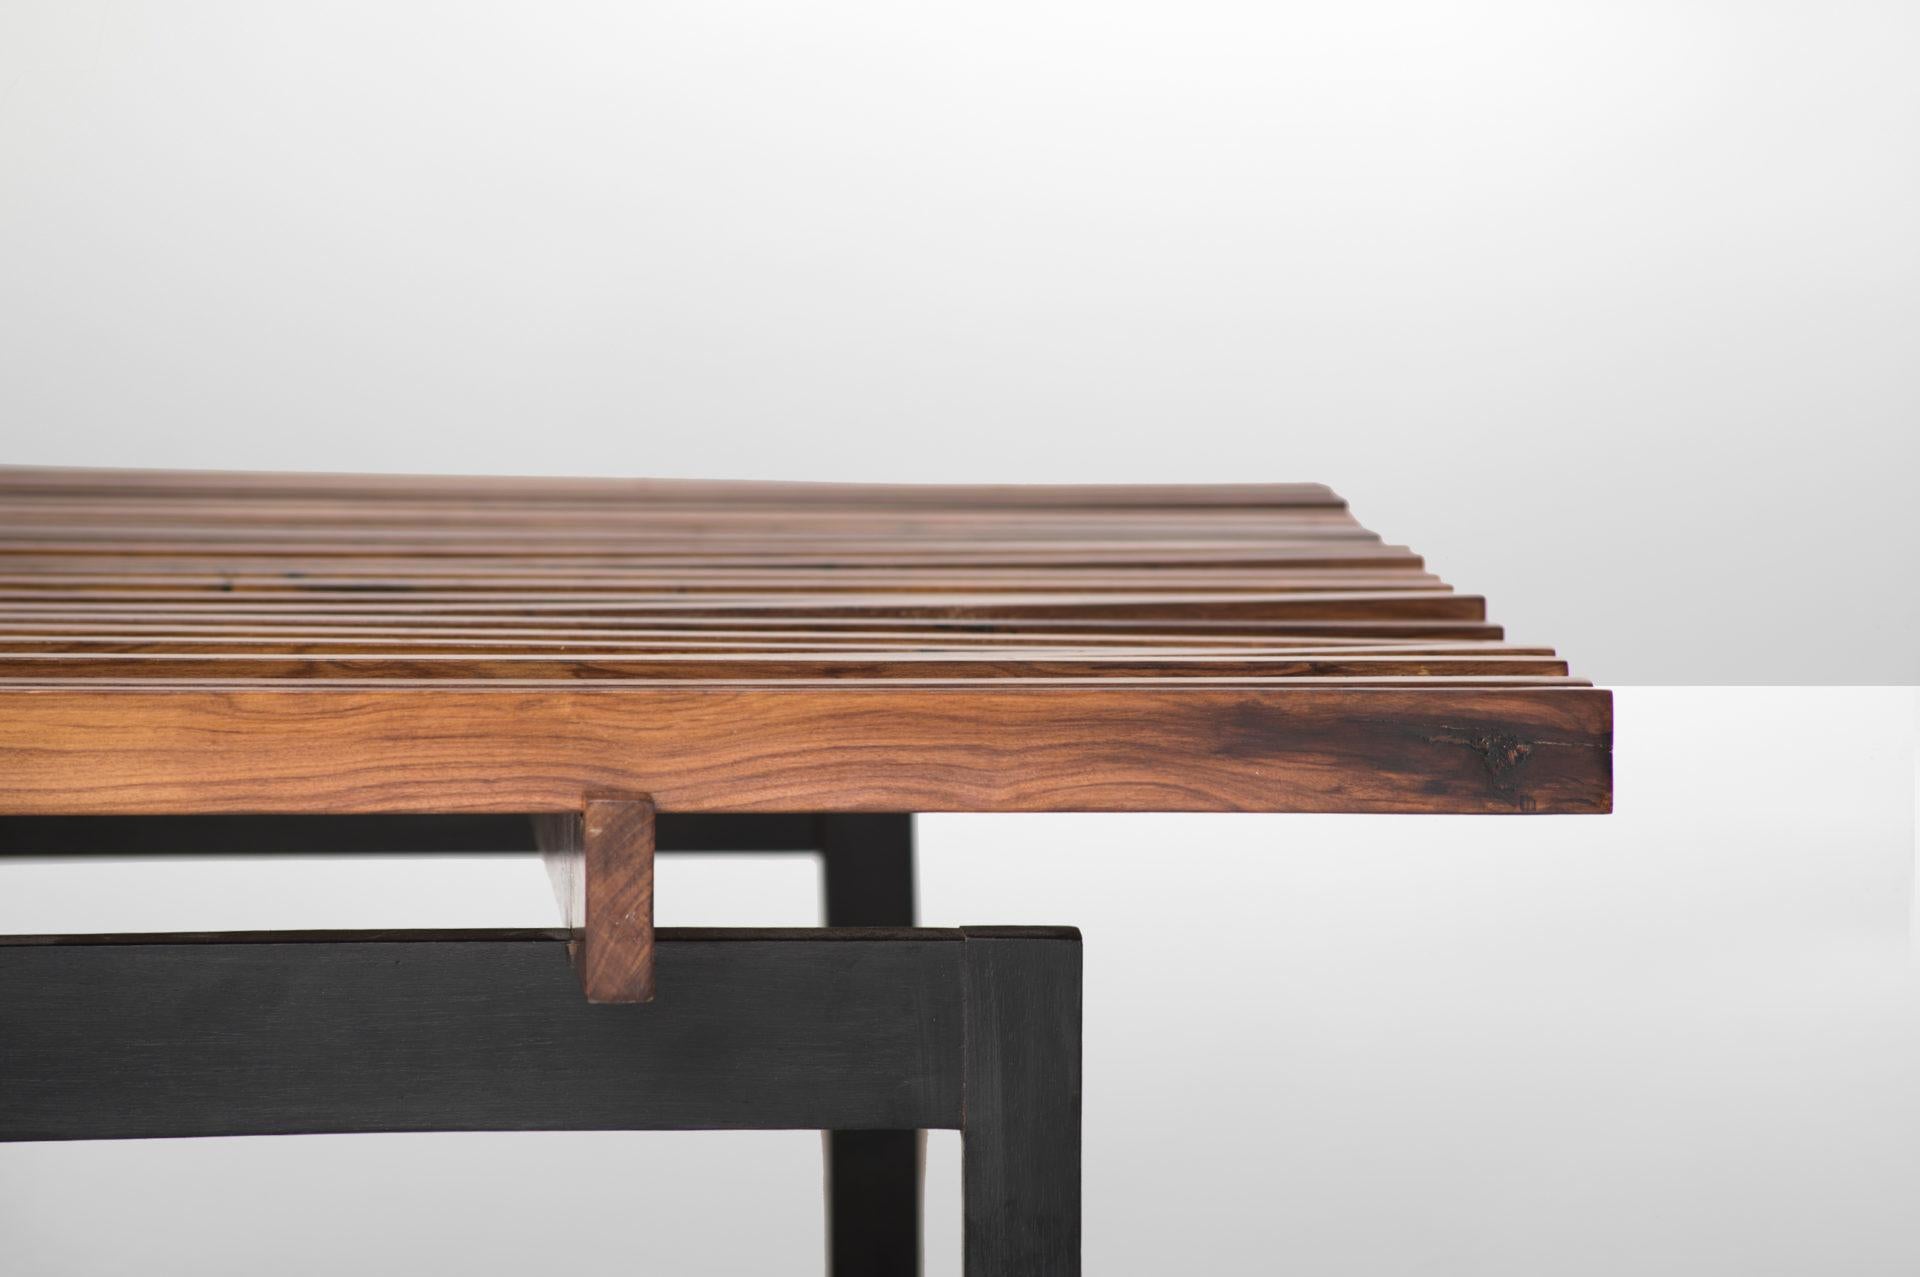 Branco & Preto
Coffee table
Measurements
180 cm x 90 cm x 33h cm 
70,86 in x 35,43 in x 13h in